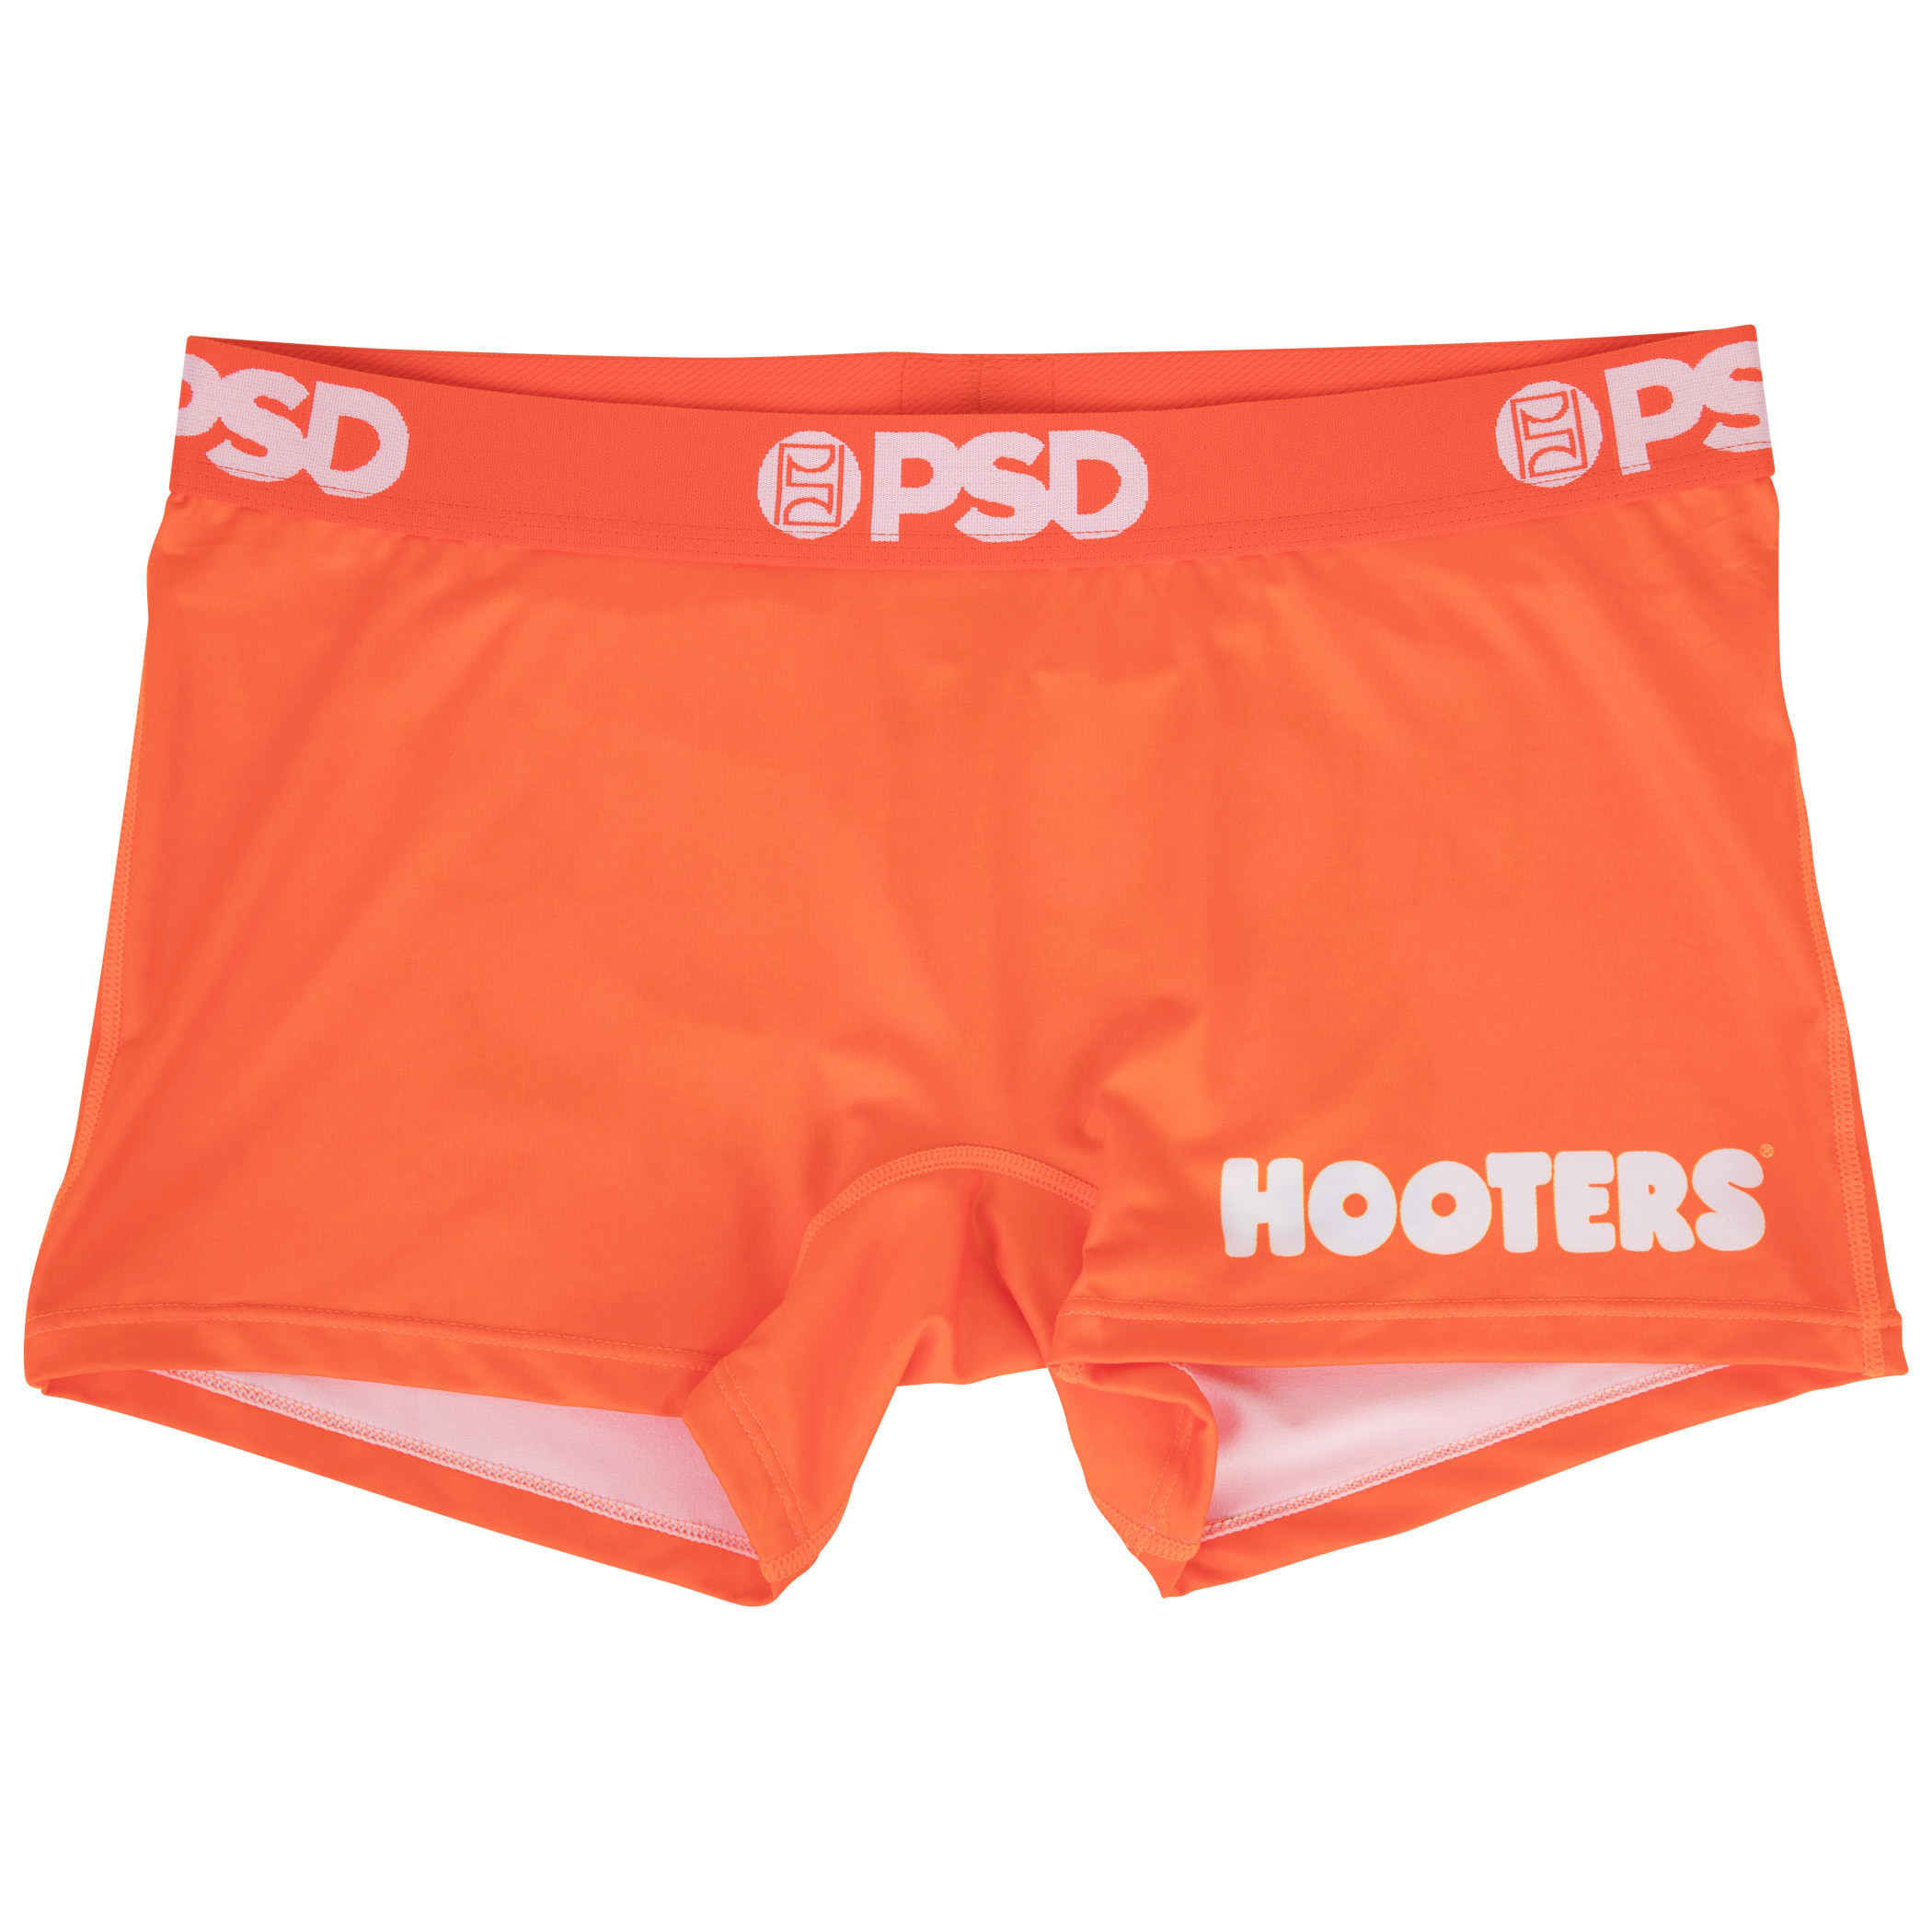 PSD Hooters Uniform Black Sports Bra